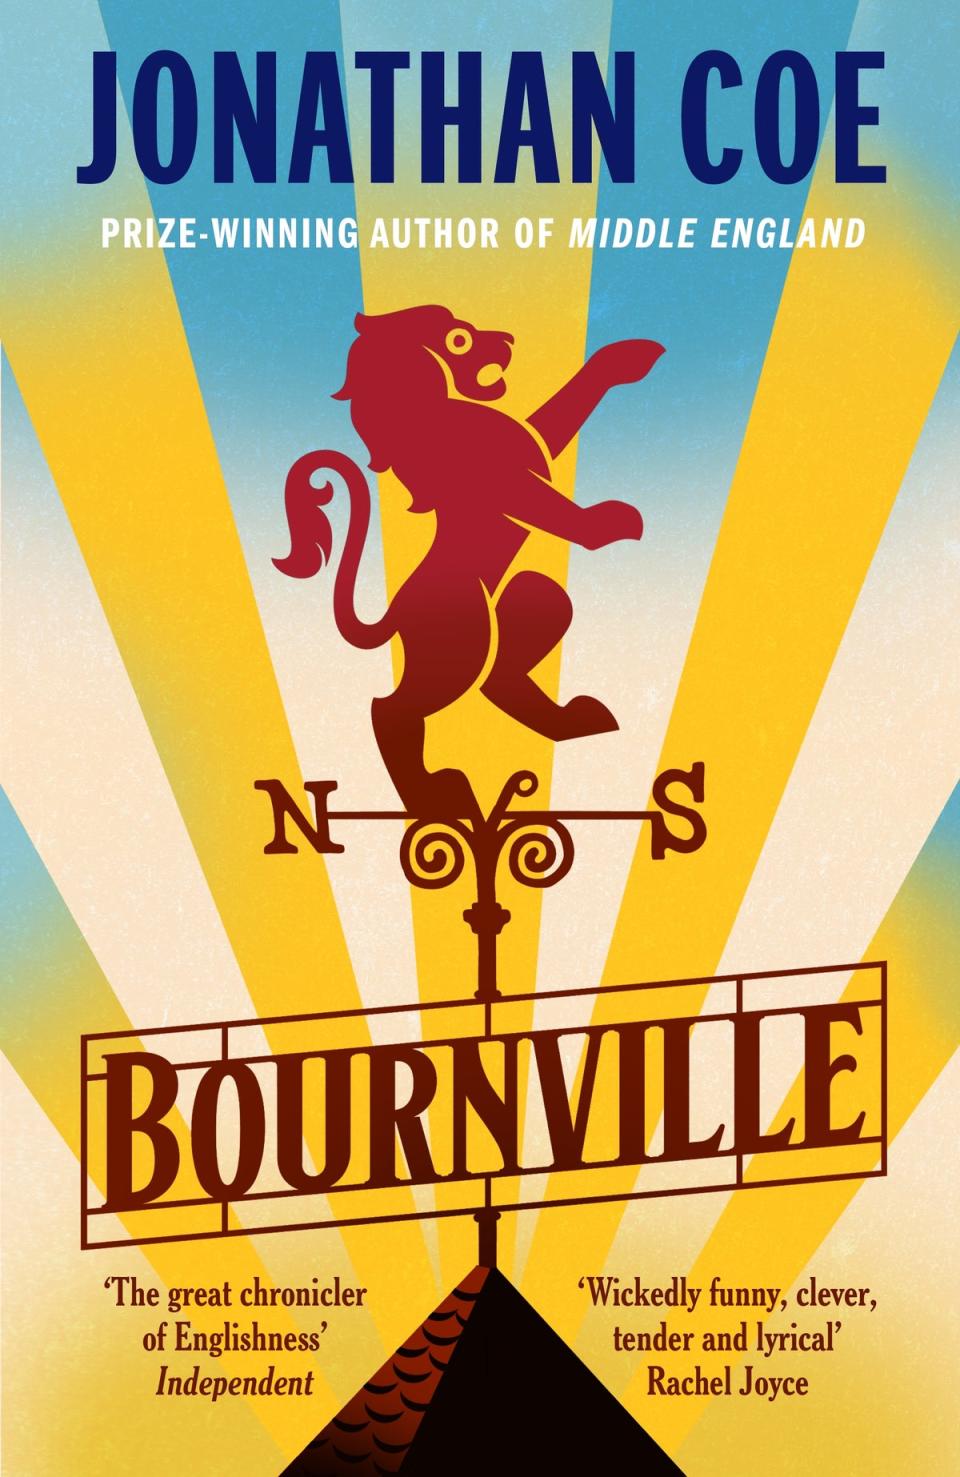 Coe’s latest book ‘Bournville' (Penguin Books UK)